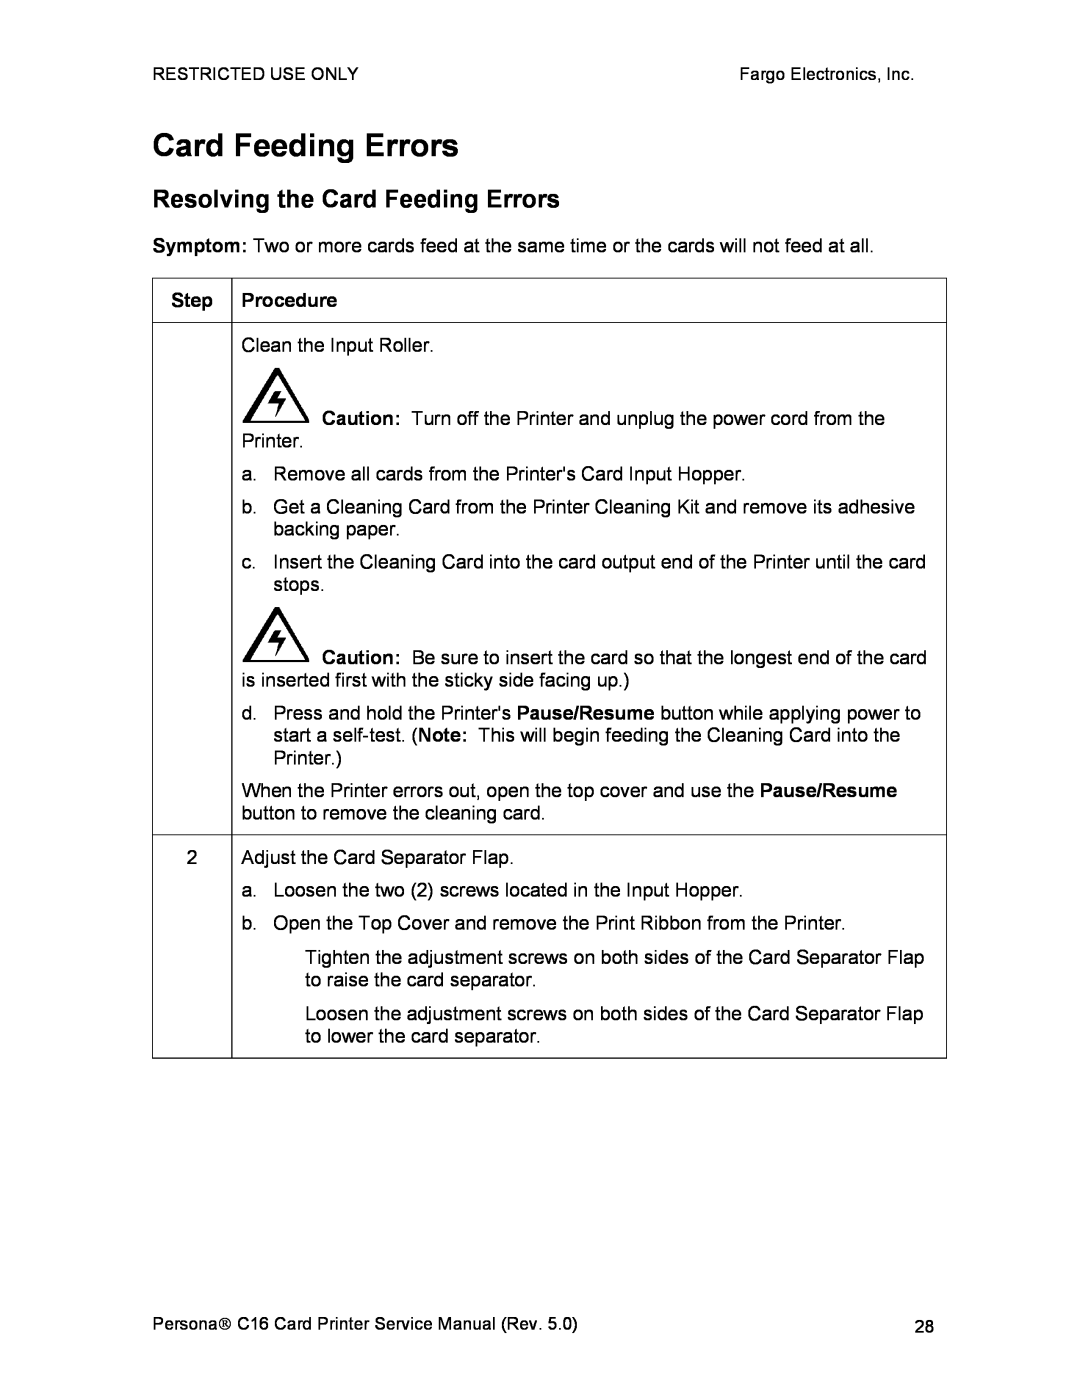 FARGO electronic C16 service manual Resolving the Card Feeding Errors 